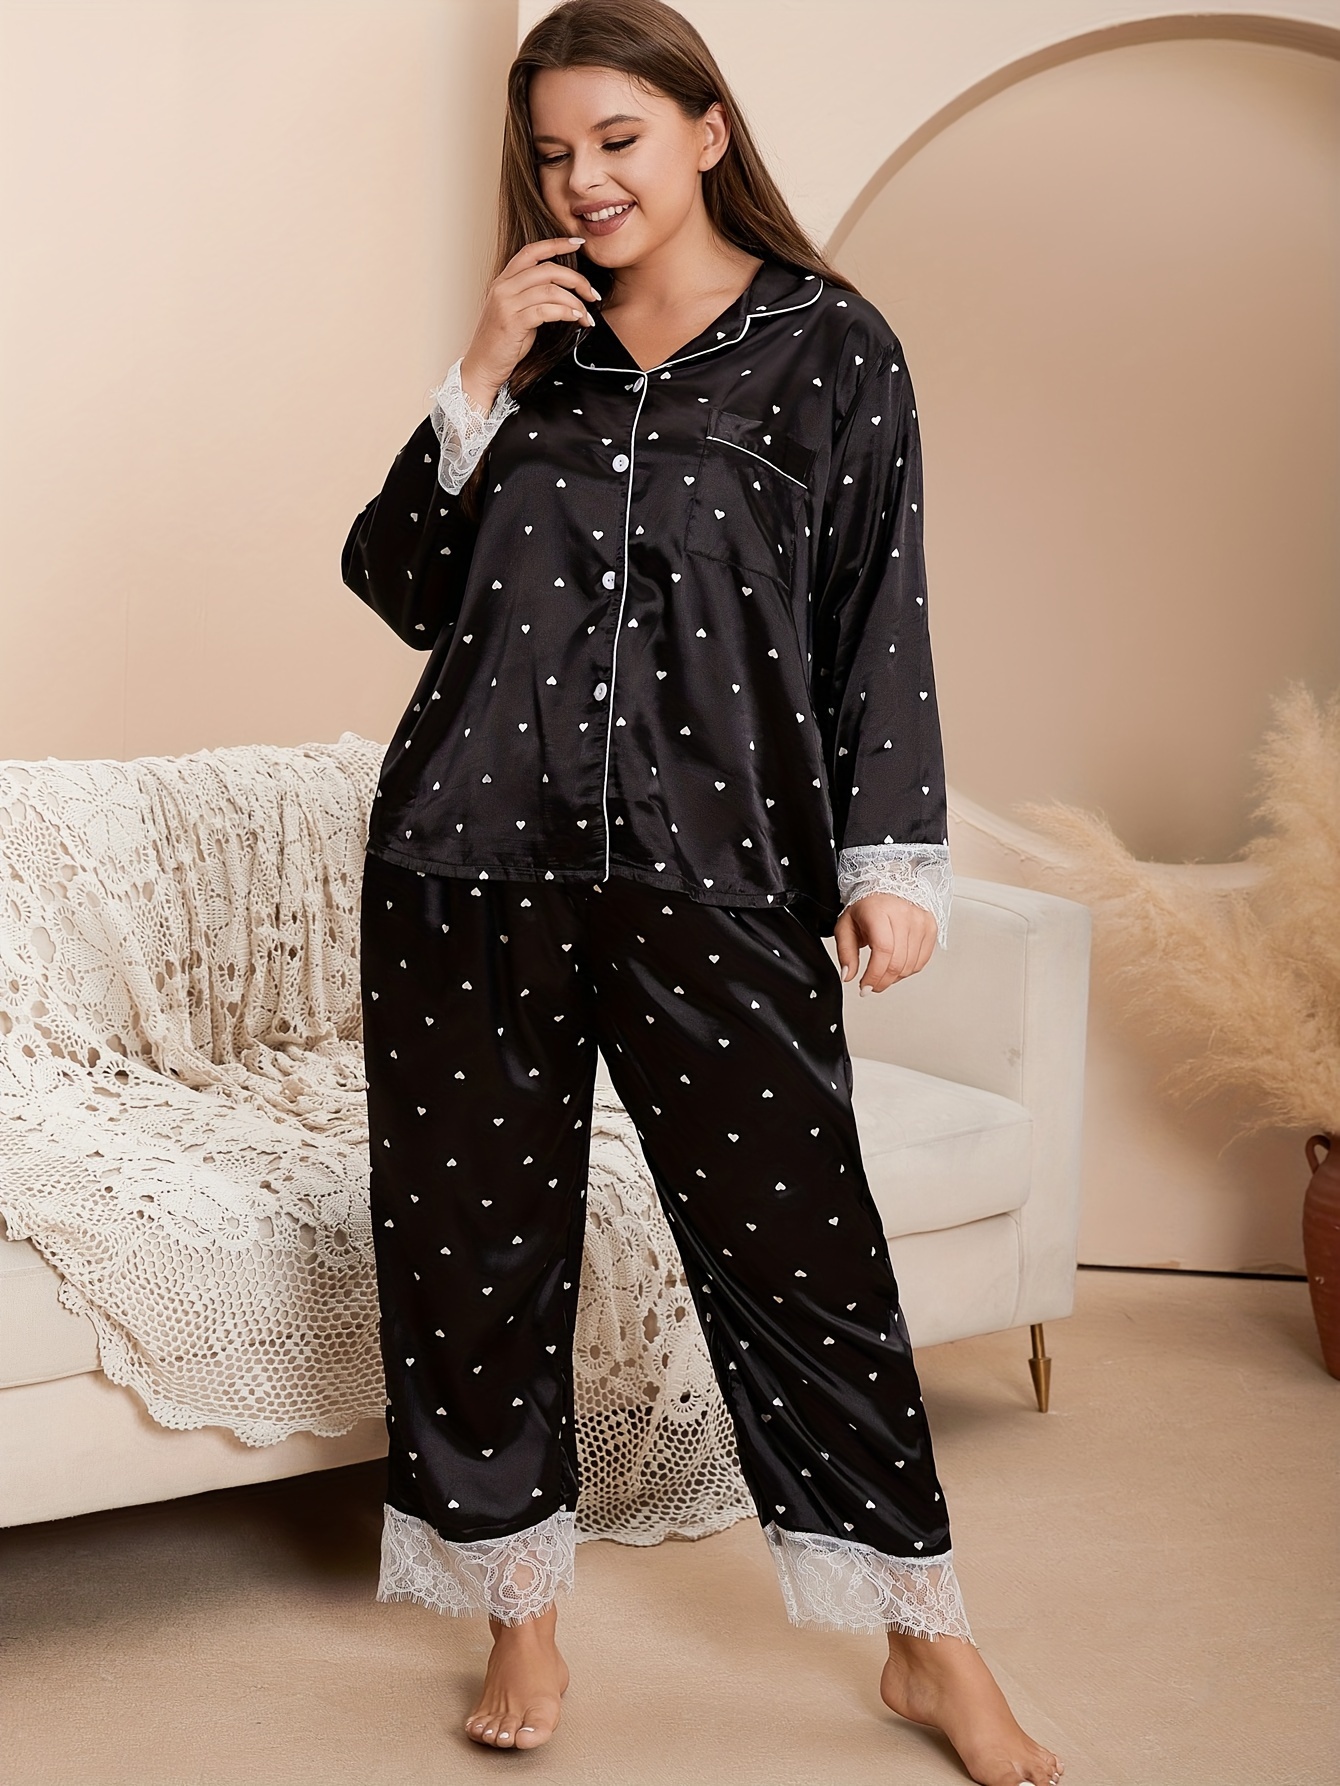 Shop Generic Silk Pajamas Plus Size Women Solid Cute Pajamas for